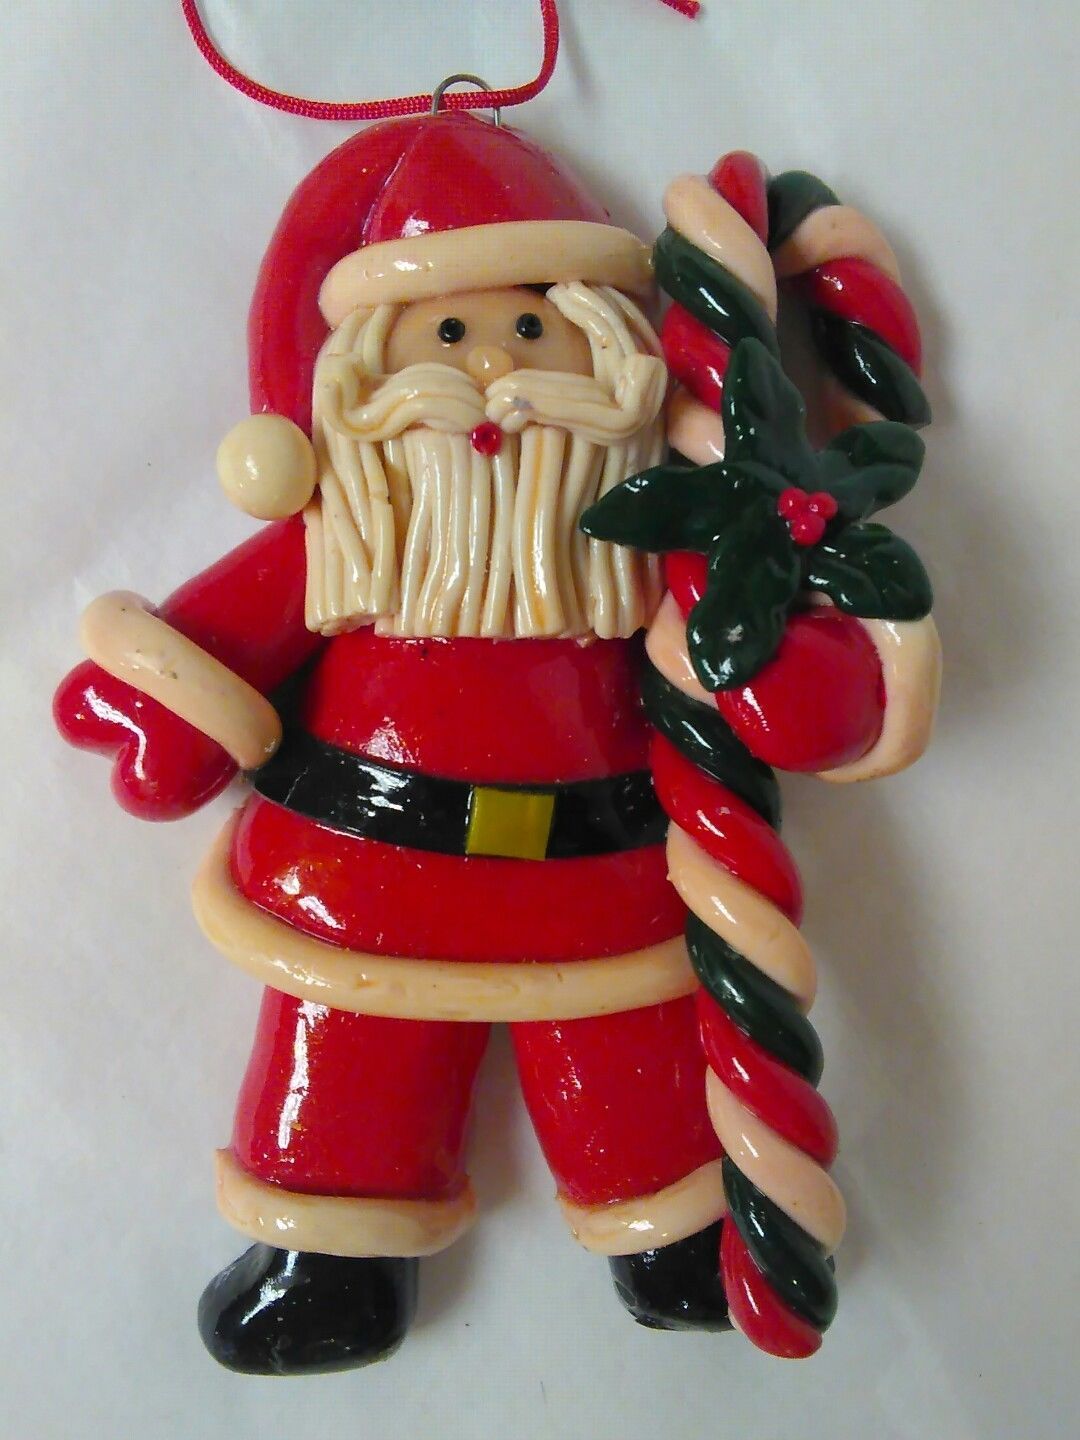 Primary image for Clay Bake Santa Christmas Tree Ornament Handmade Candy Cane Holiday Home Decor